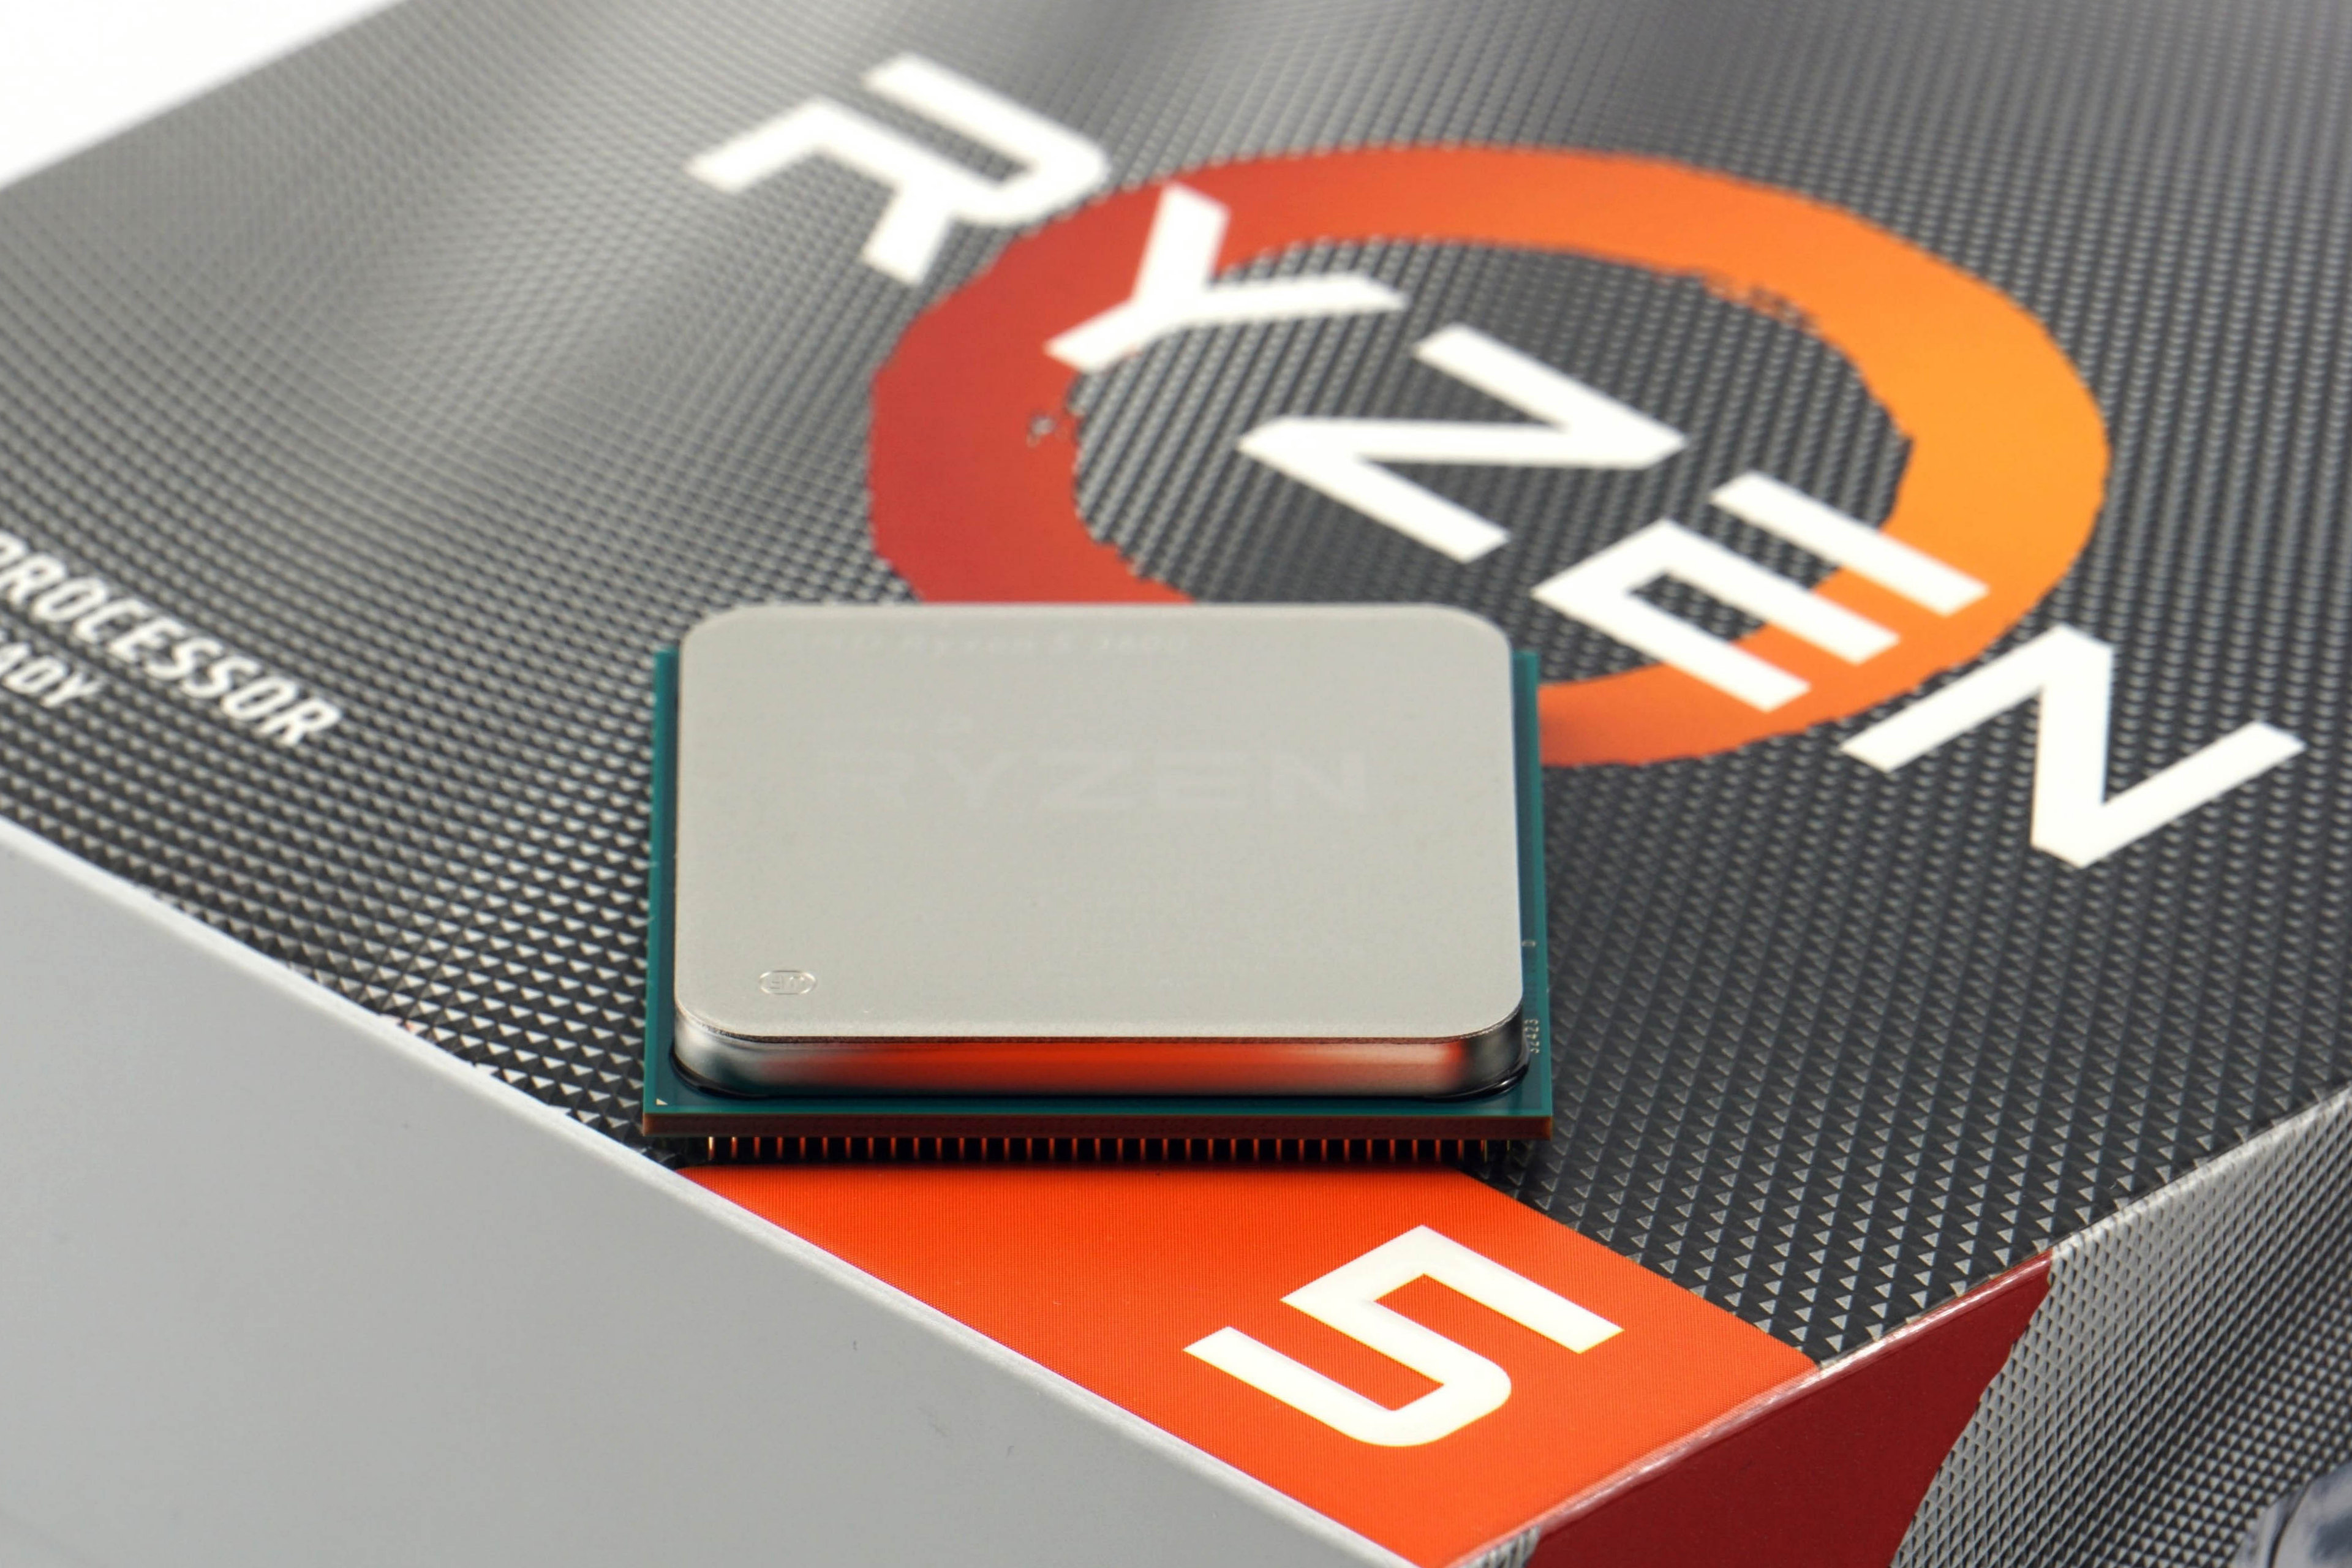 AMD Ryzen 5 3600: Older bestseller head-to-head with new CPUs 